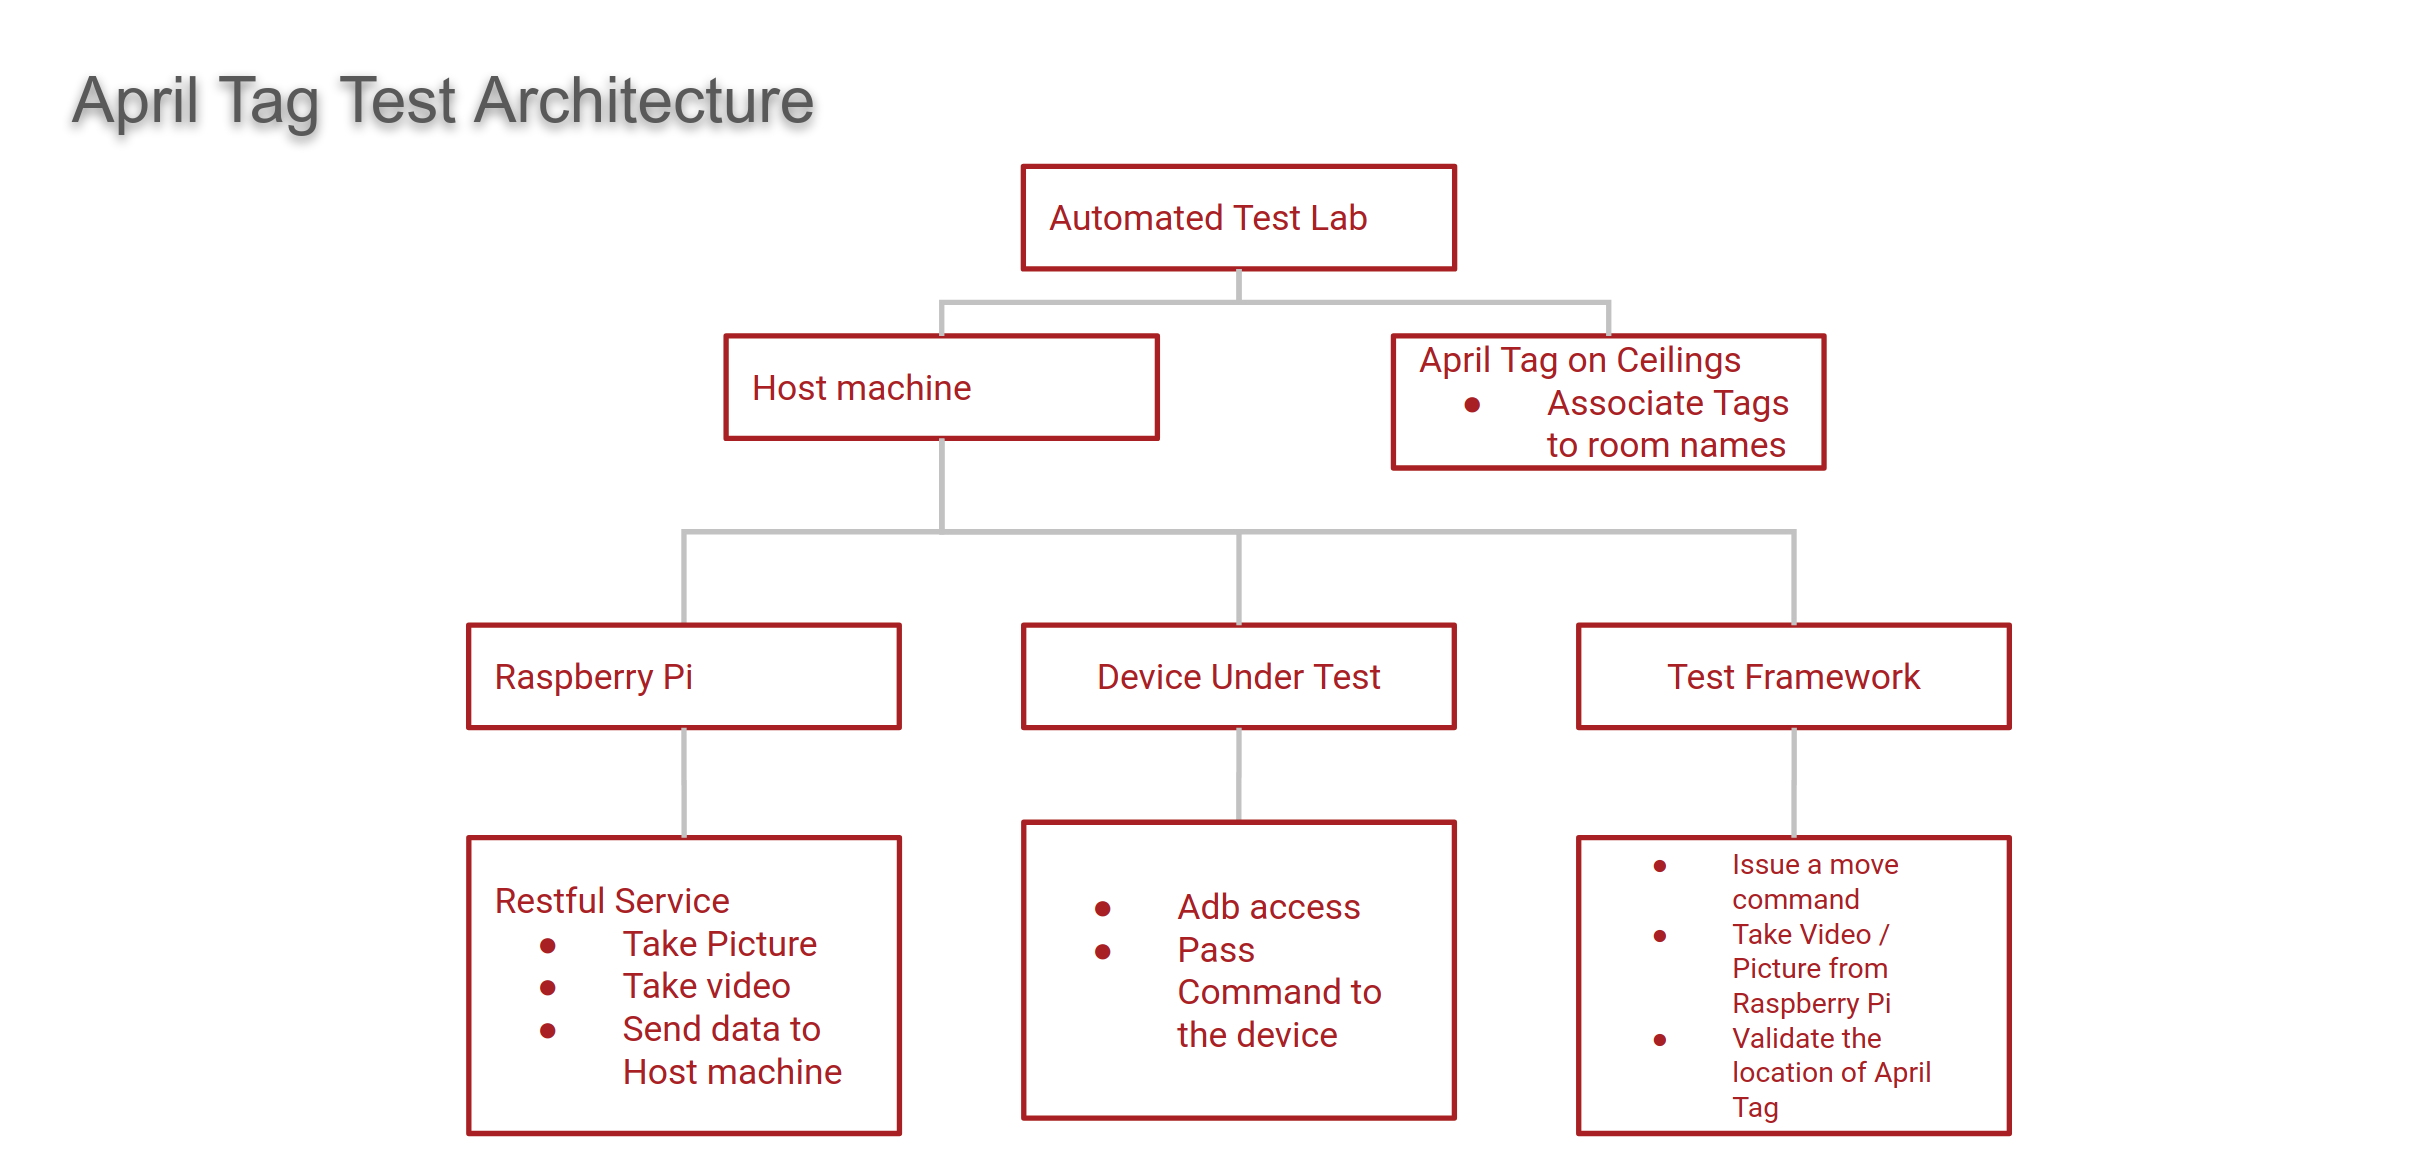 E2E Test Automation Architecture